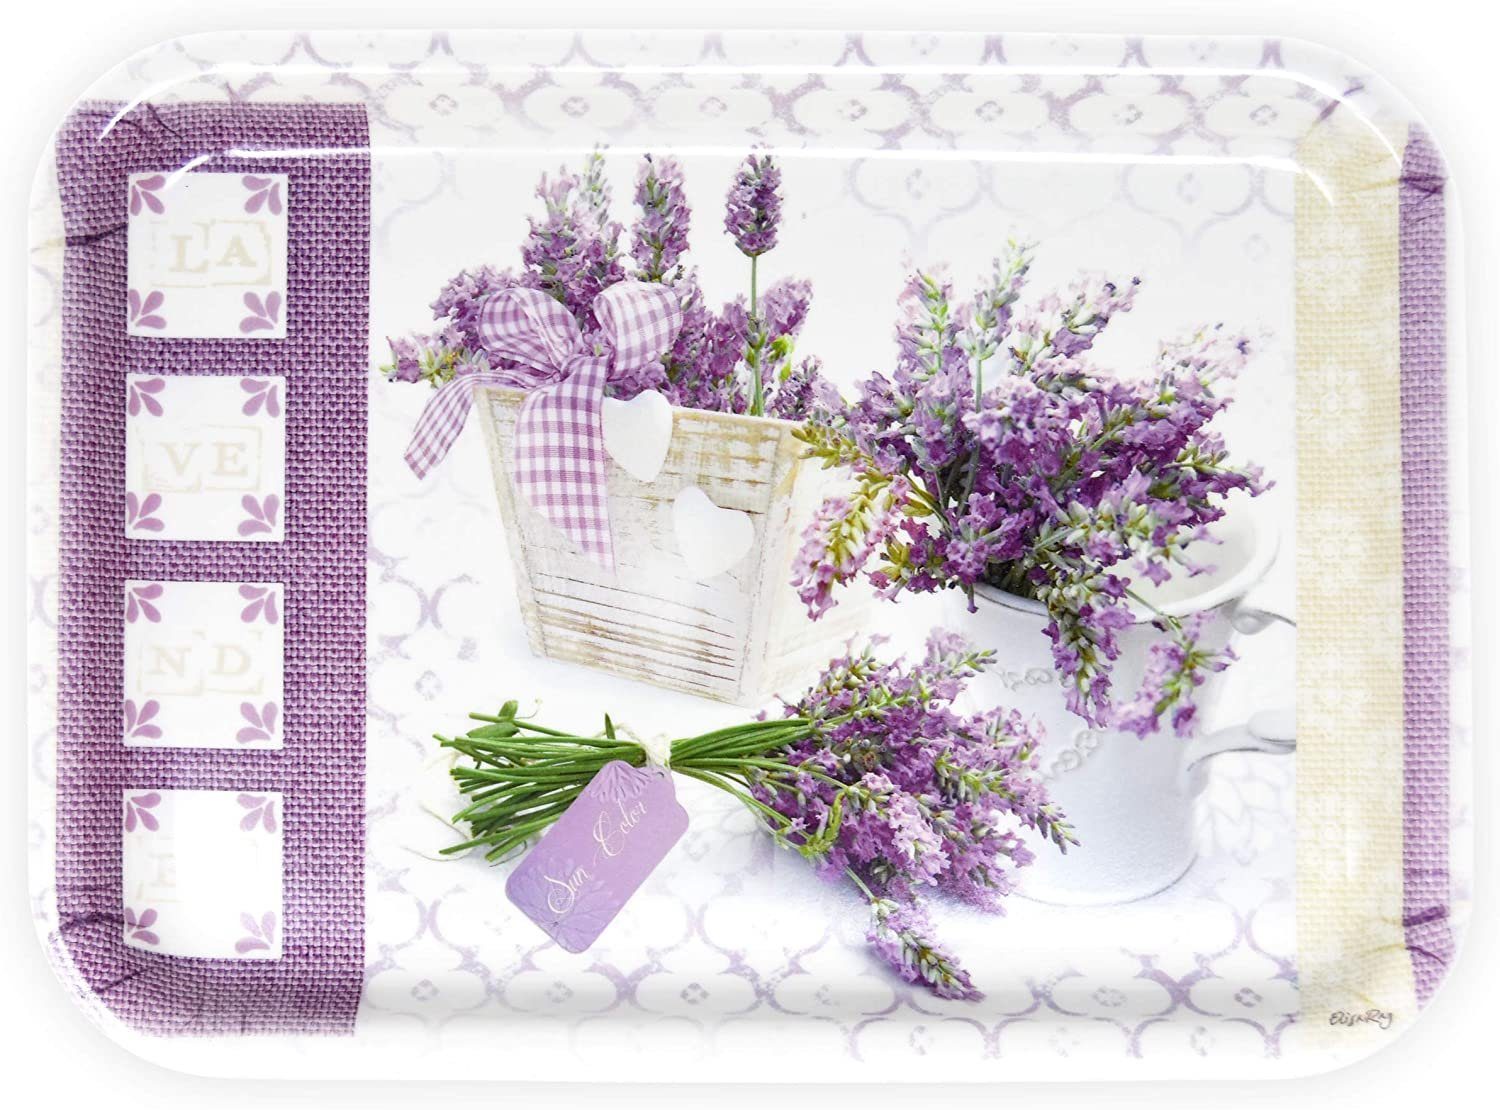 (1-tlg), Lashuma Teetablett Mediterranes cm Lavendeltraum, Kunststoff, 31x23 Tablett lila